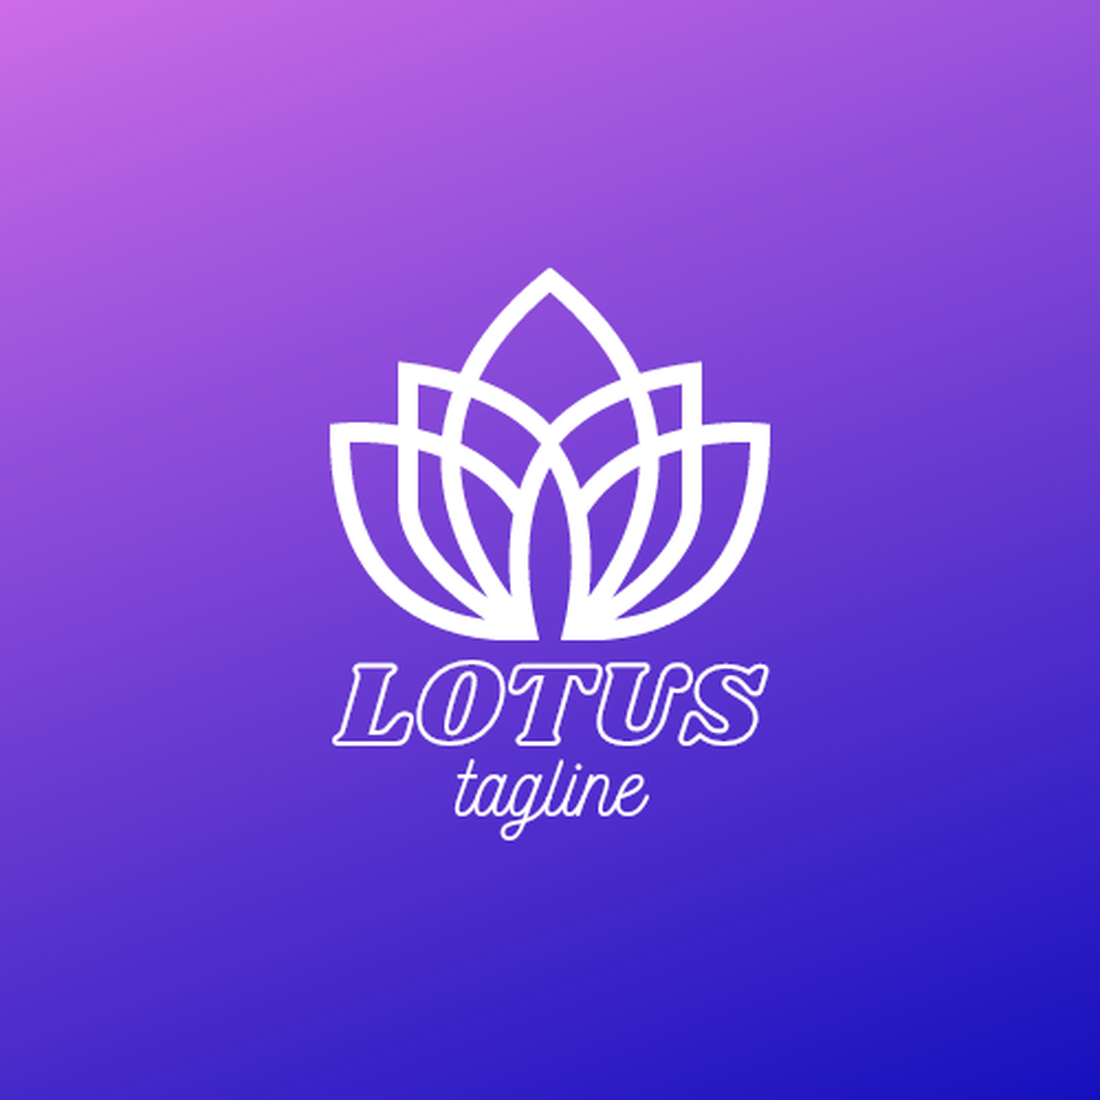 Minimalist Lotus Logo Design cover image.